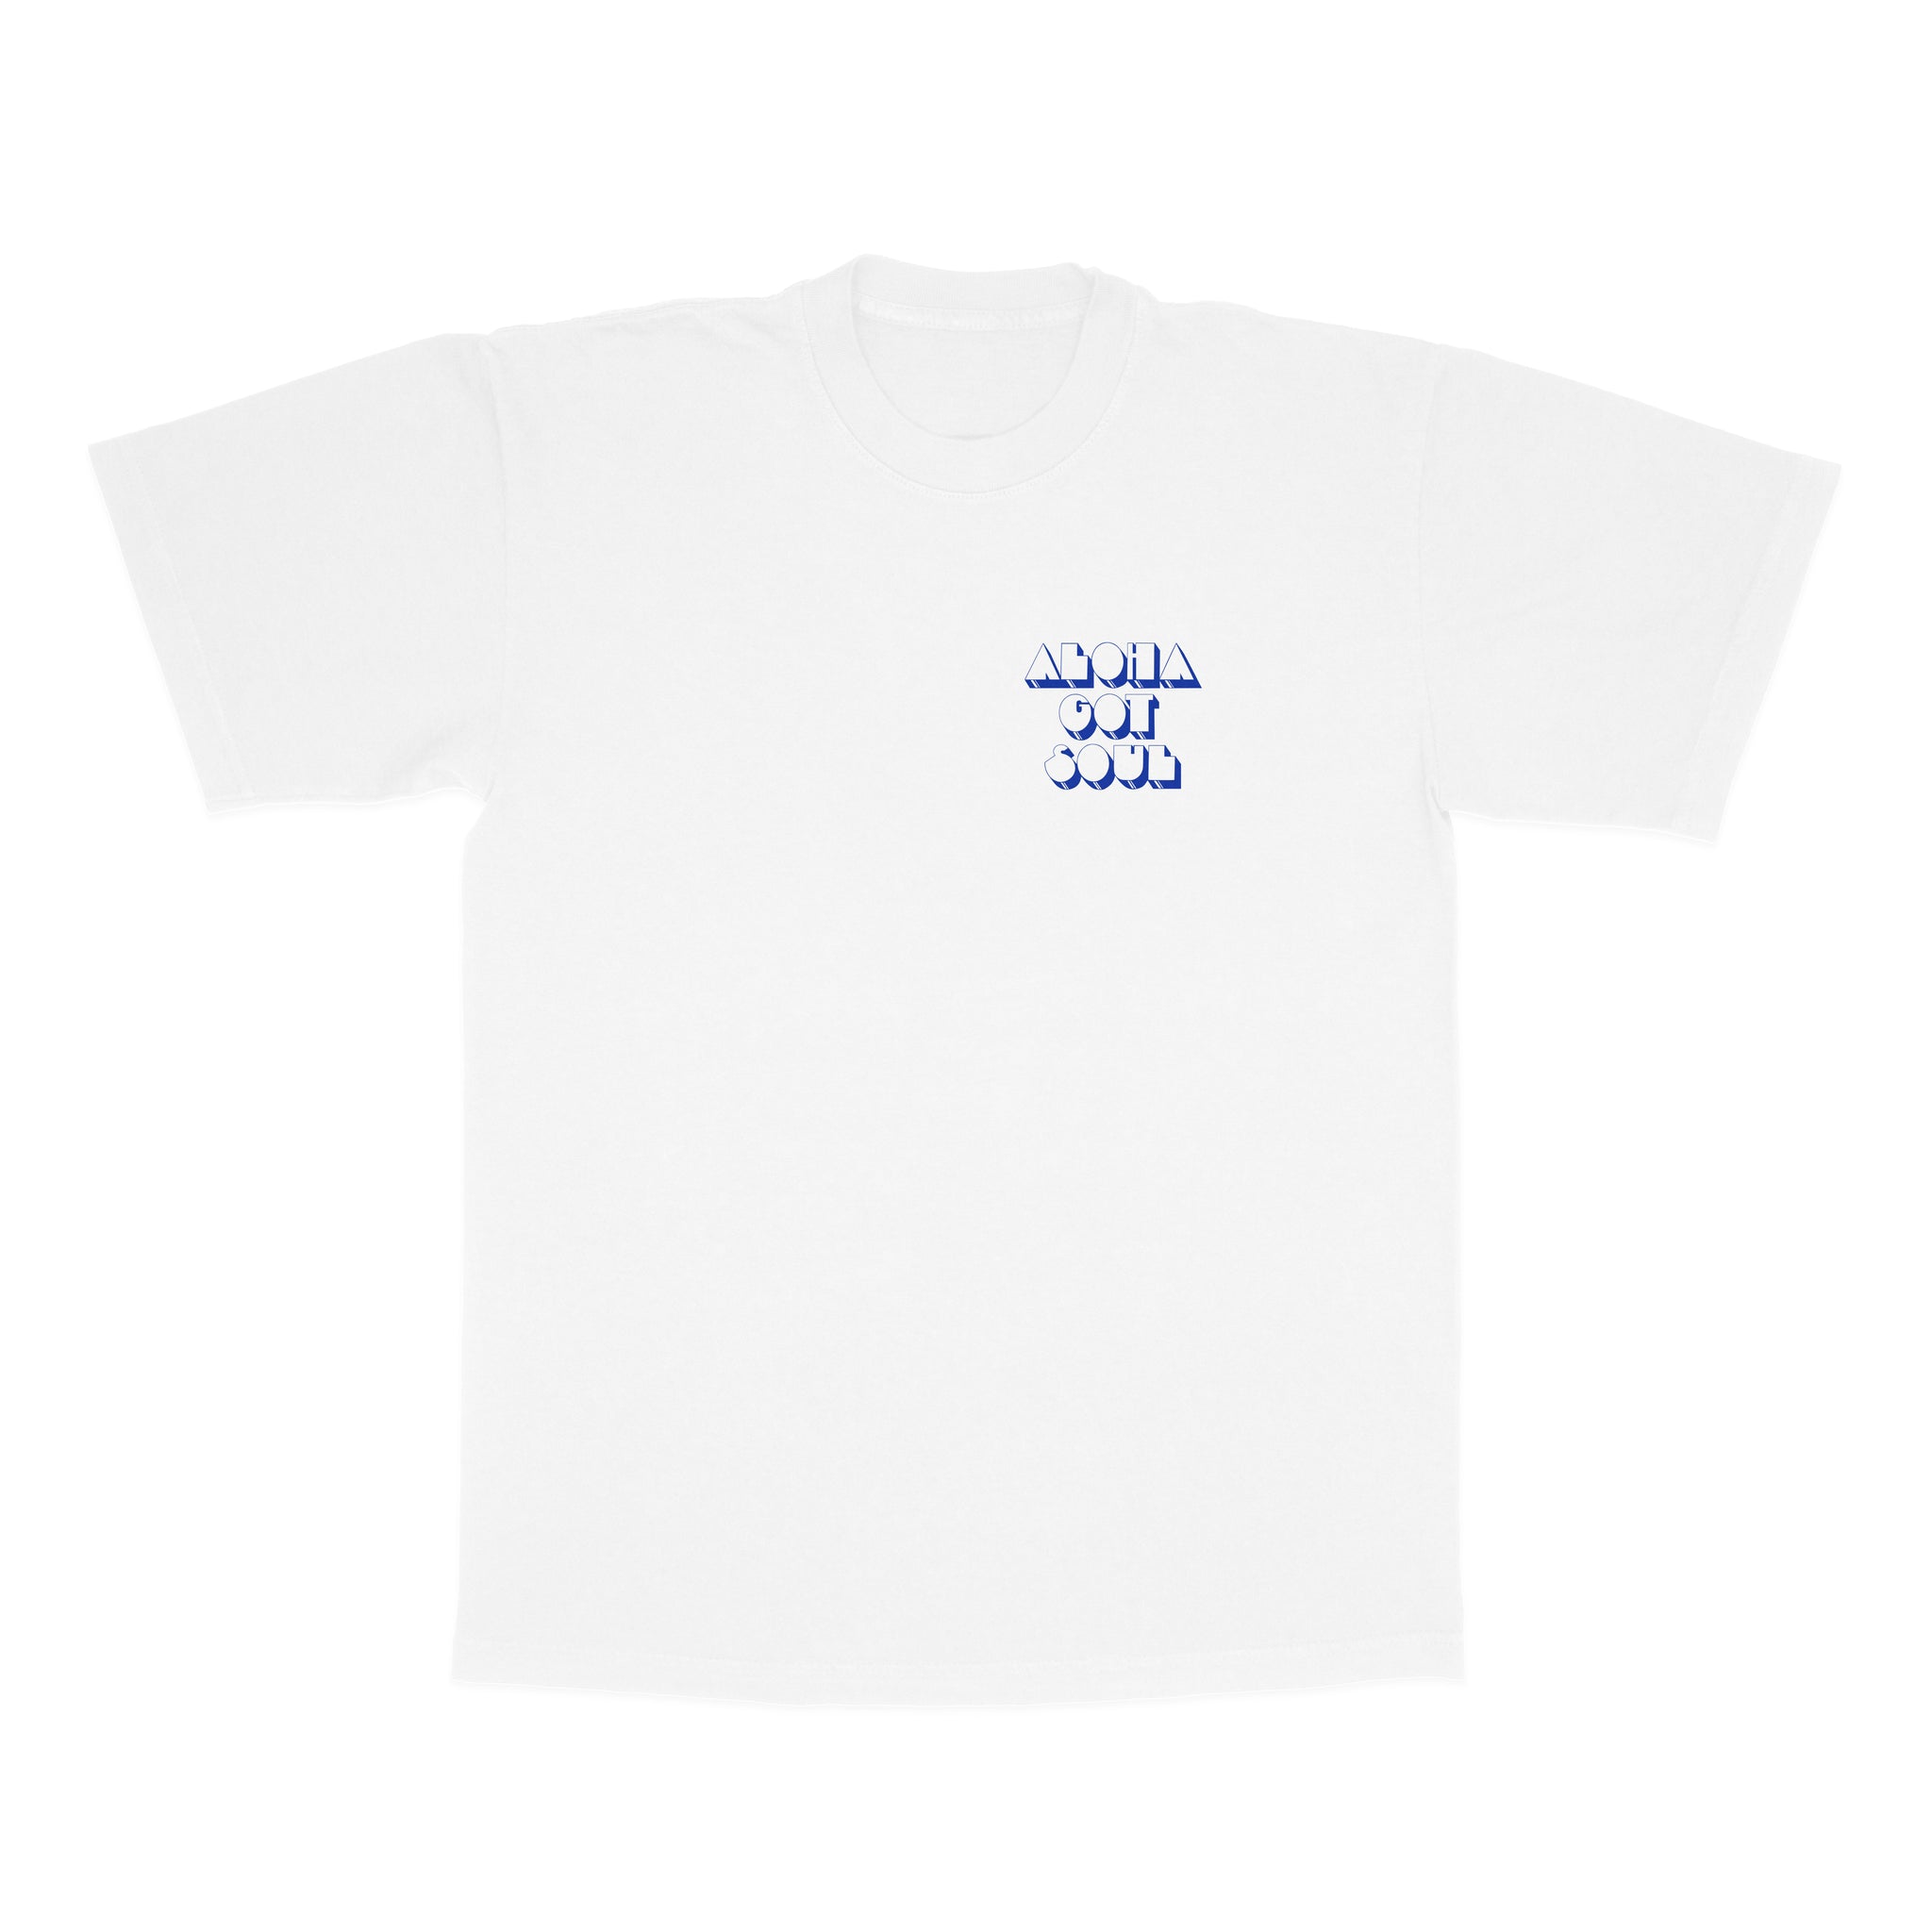 Disco Island T-shirt (White / Blue)